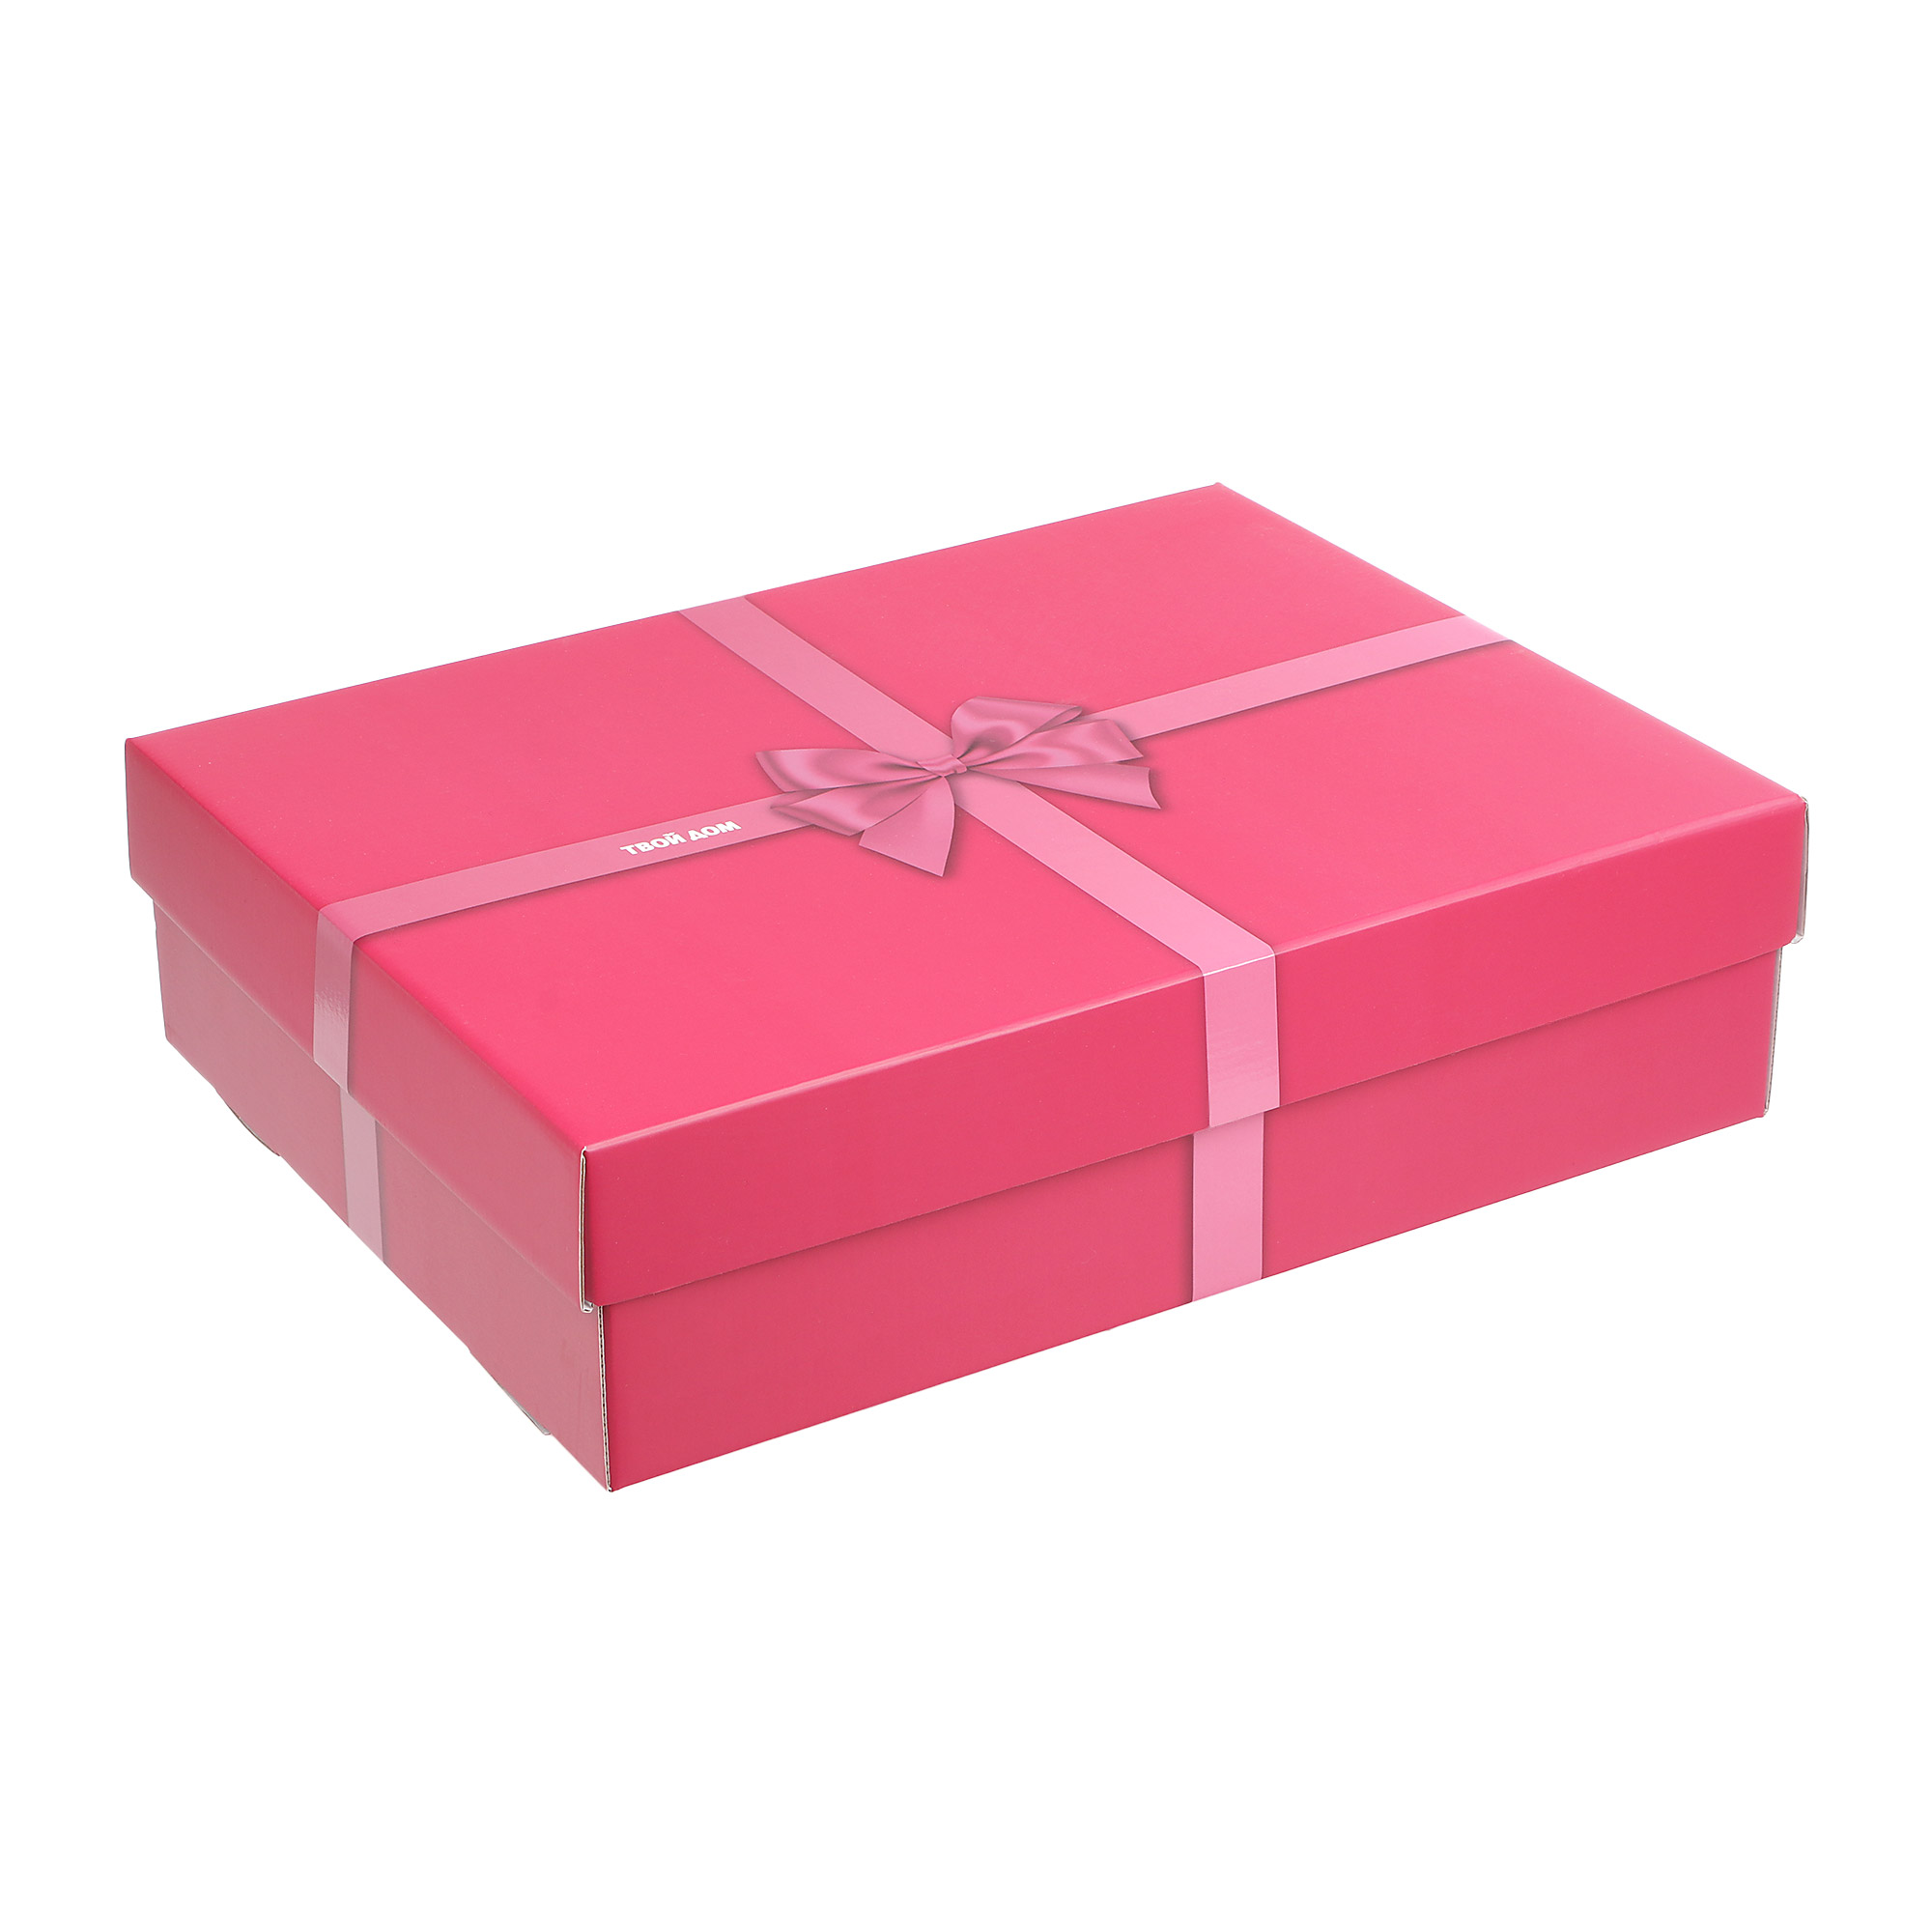 Коробка подарочная Твой Дом розовая  45x35x12 шляпная коробка розовая 23 х 23 см